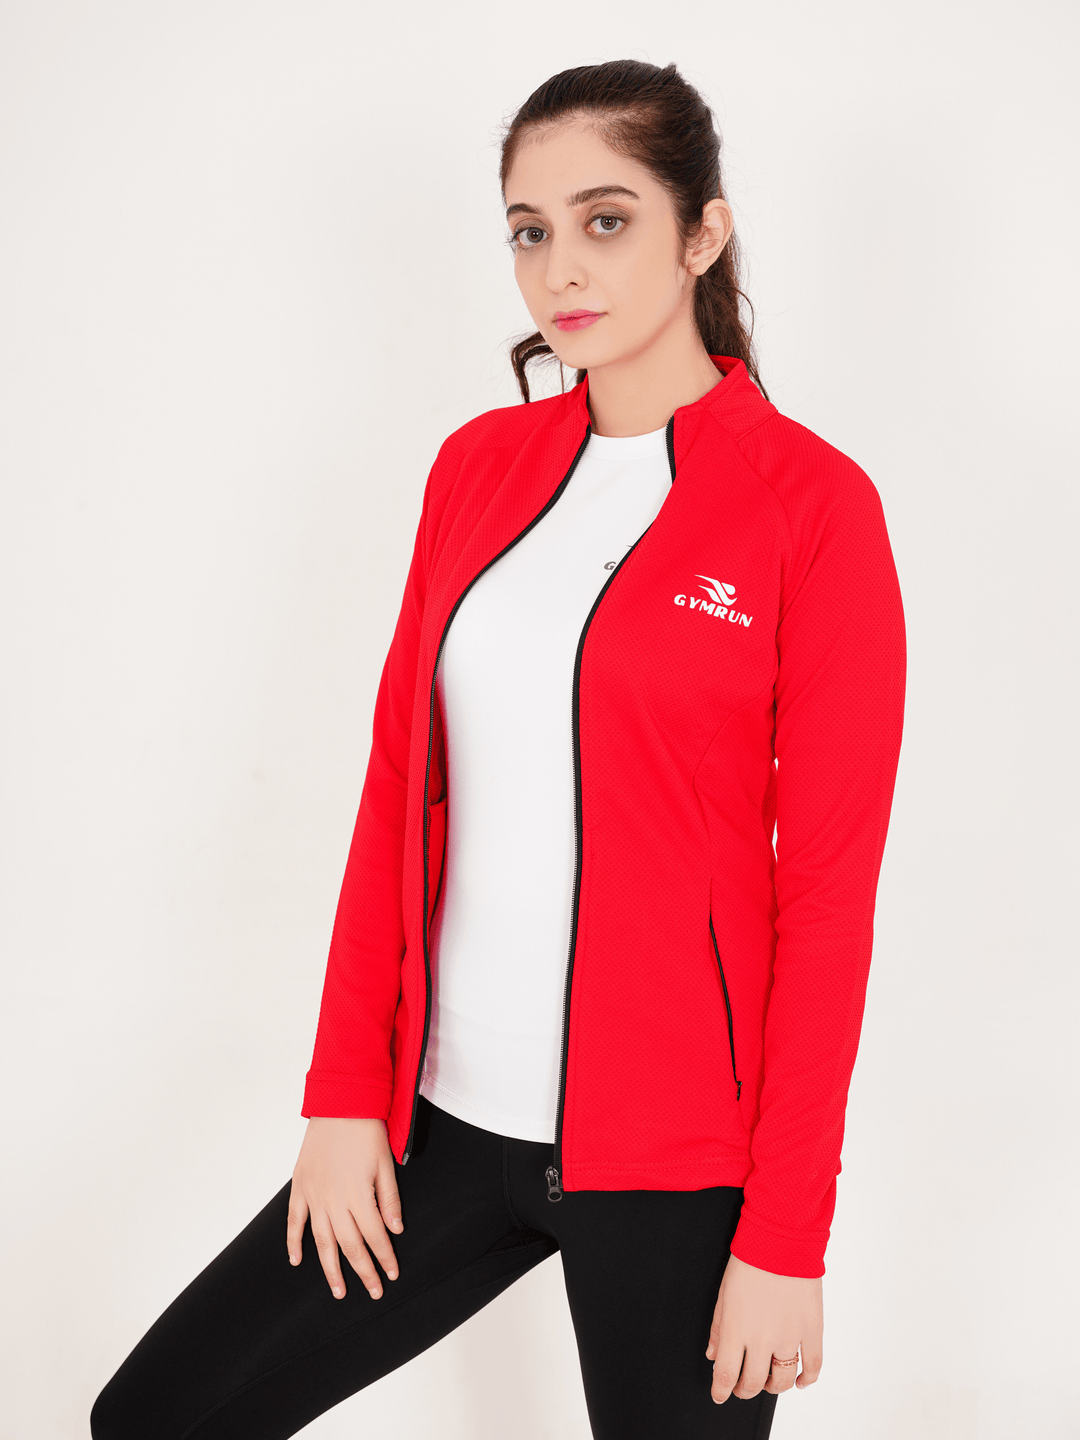 Ladies' Performance Jacket - Red - GYMRUN Activewear